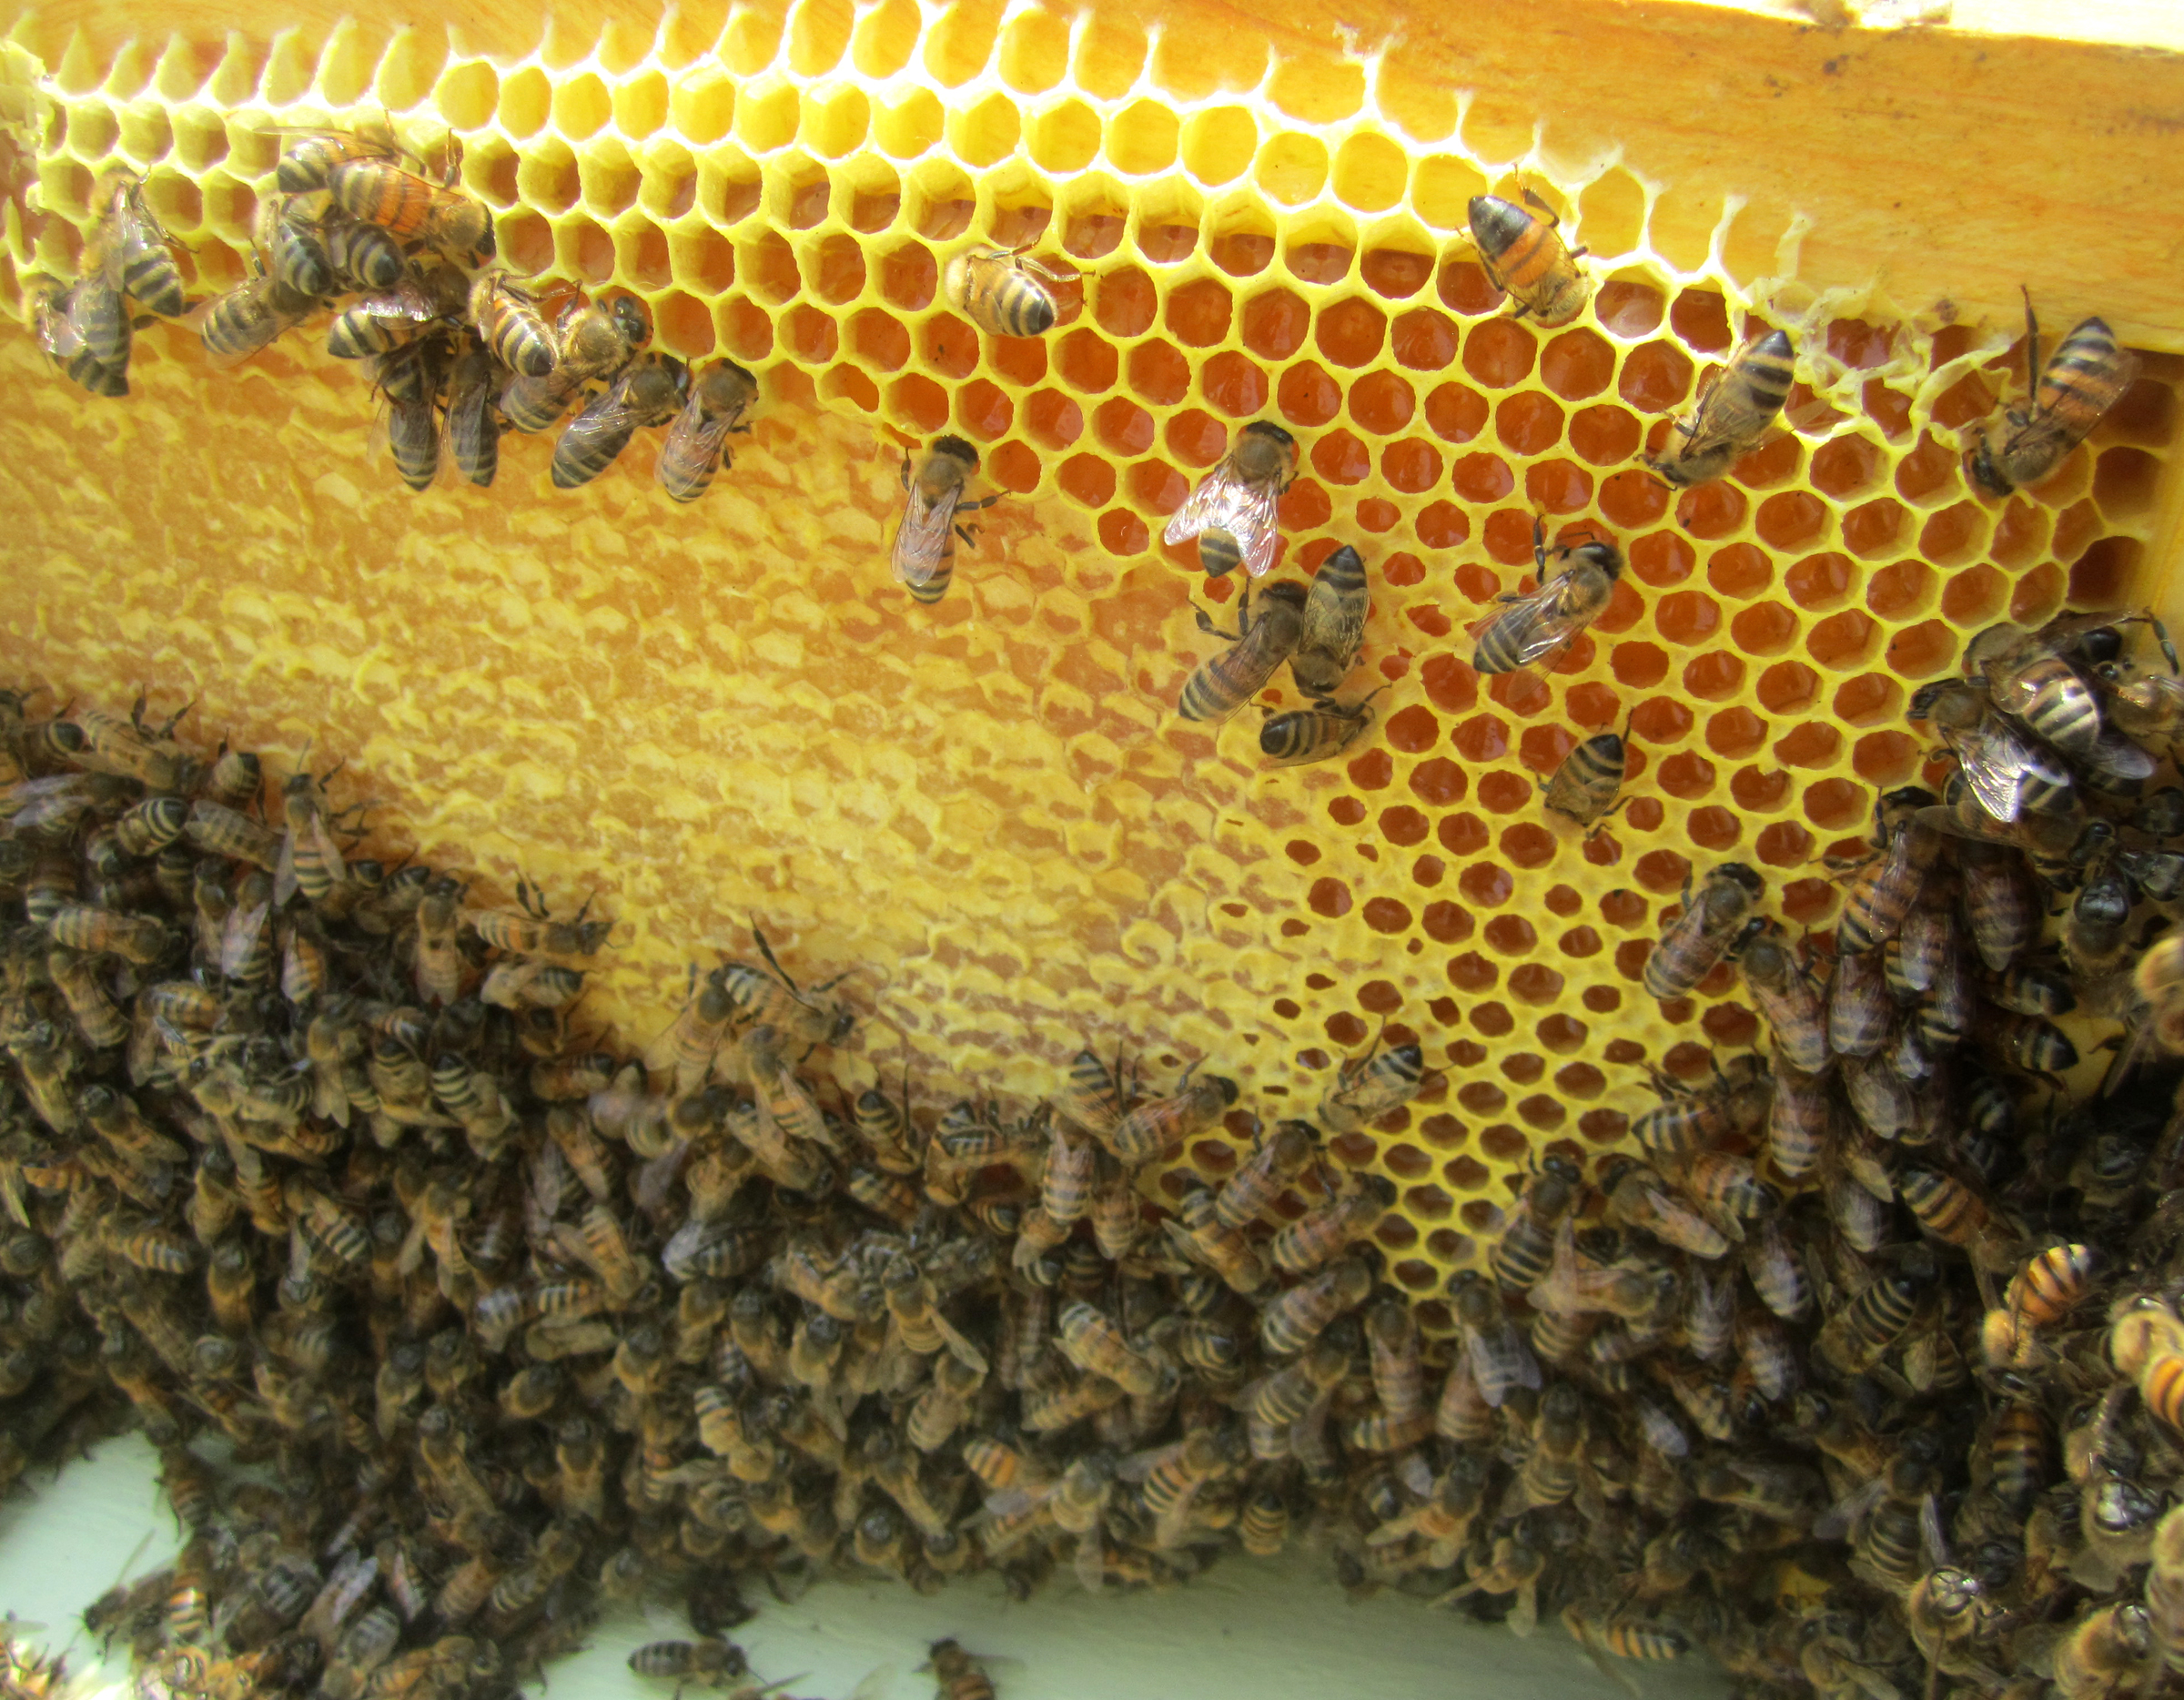 Bees on honey